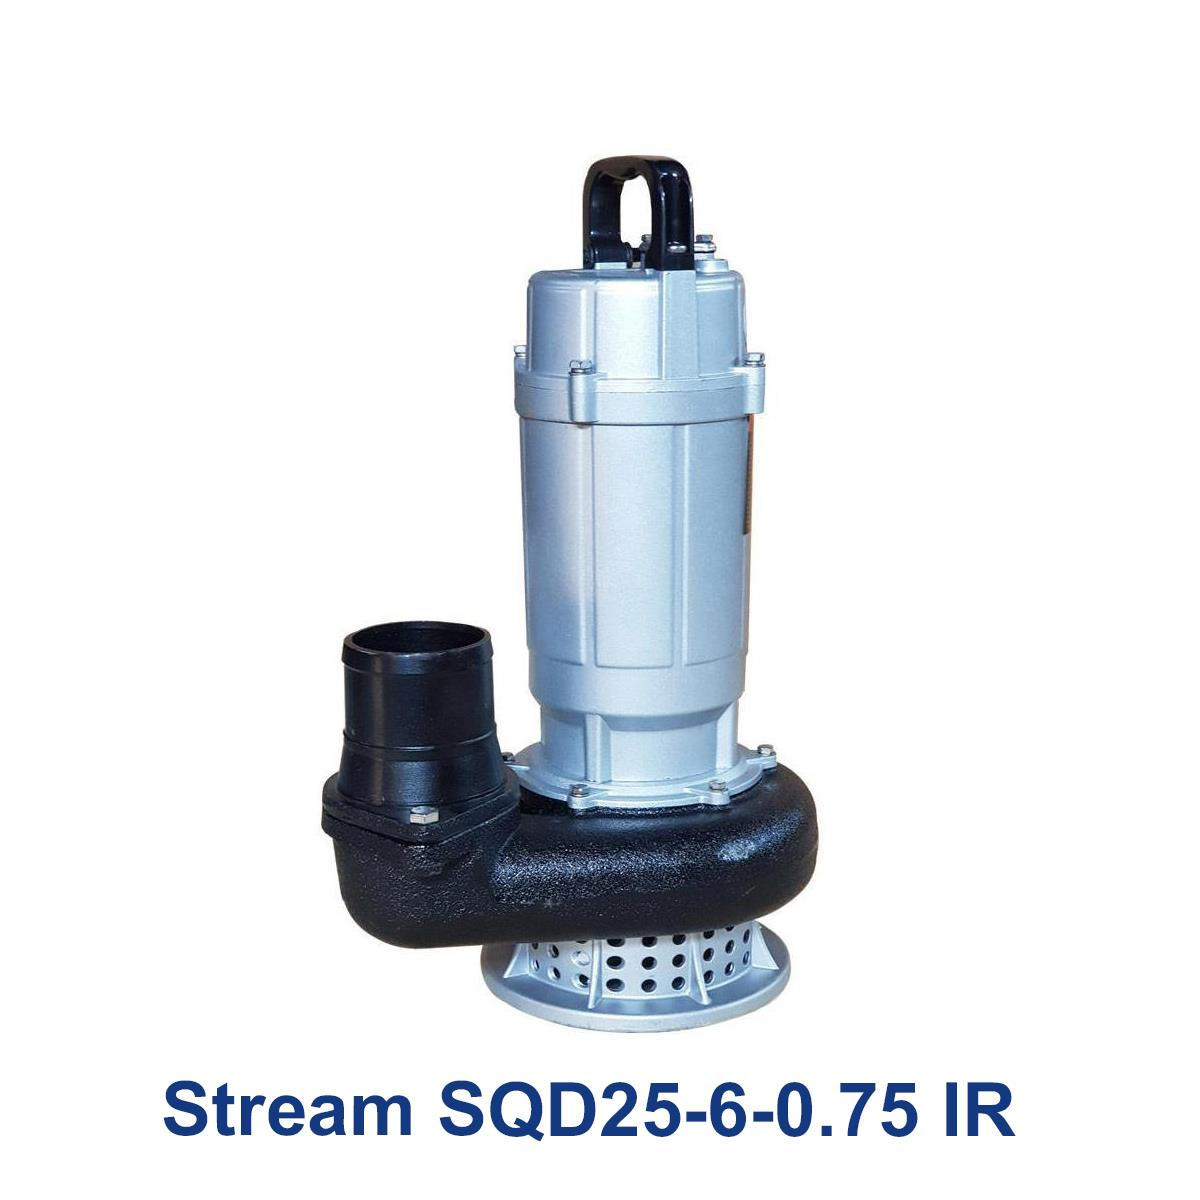 Stream-SQD25-6-0.75-IR